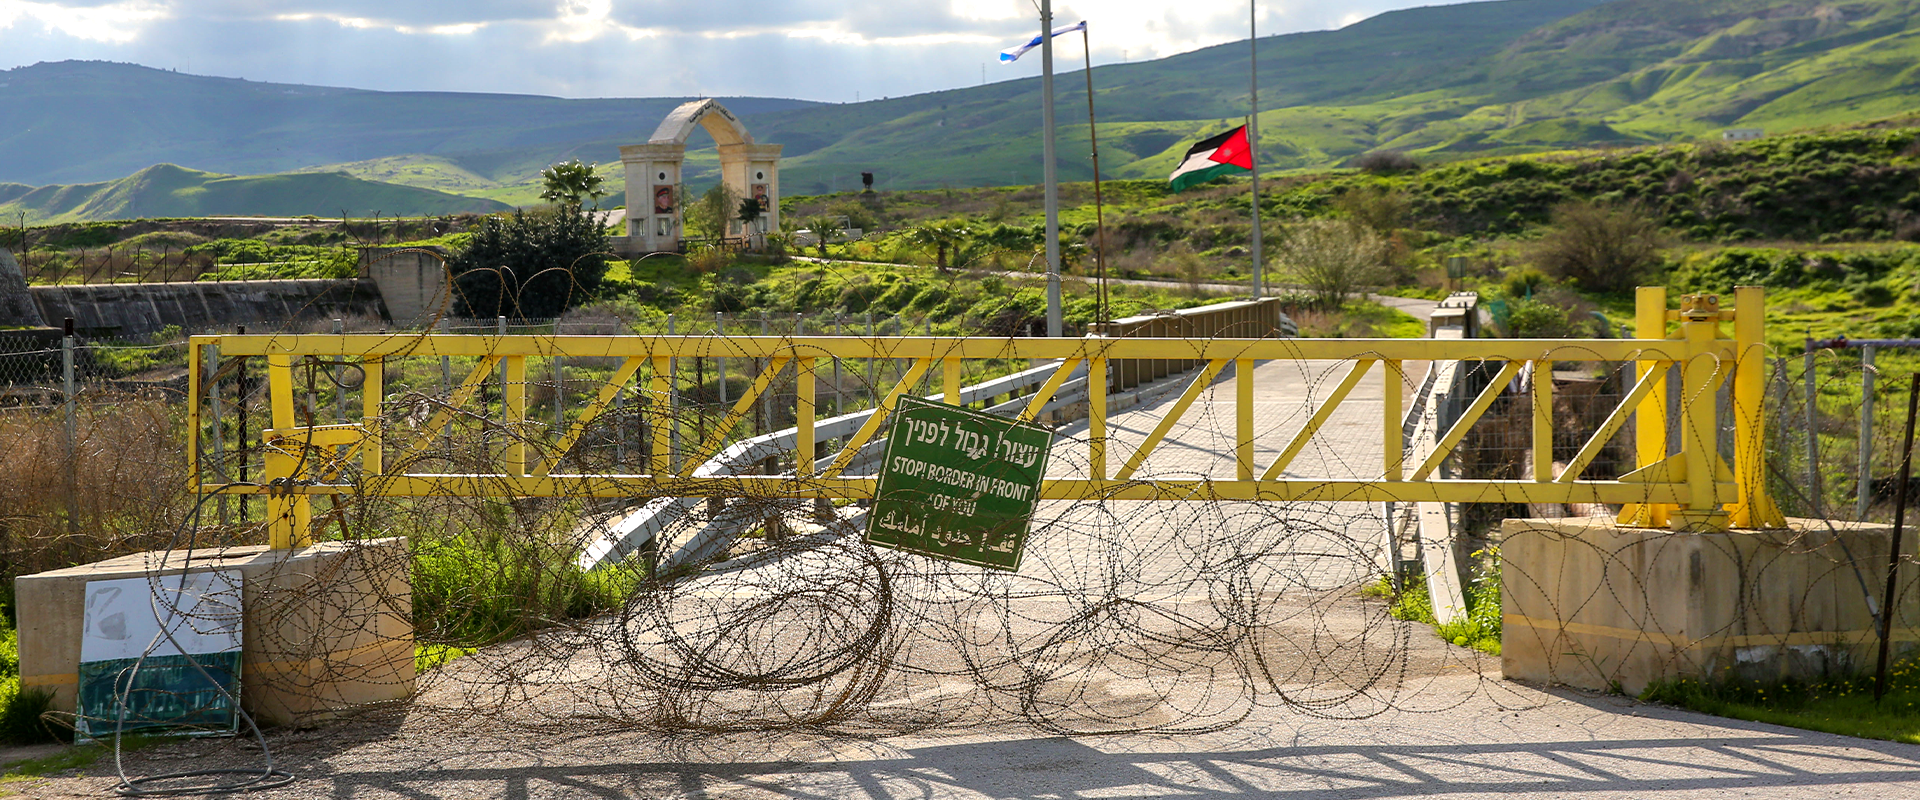 גבול ירדן ישראל (צילום: פלאש 90)